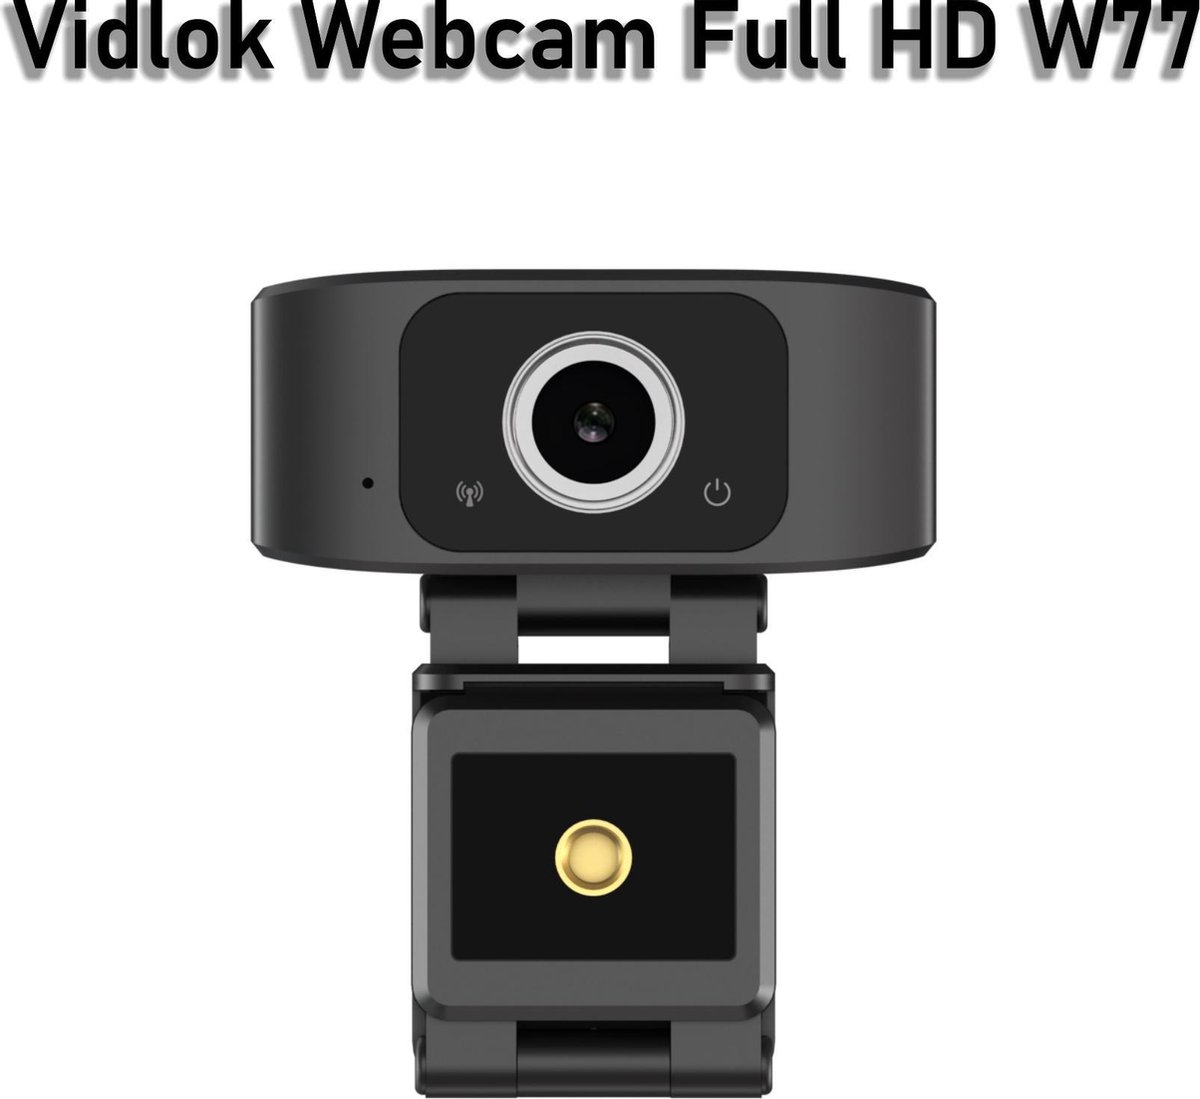 Vidlok W77 Full HD 1080P Webcam - Plug&Play